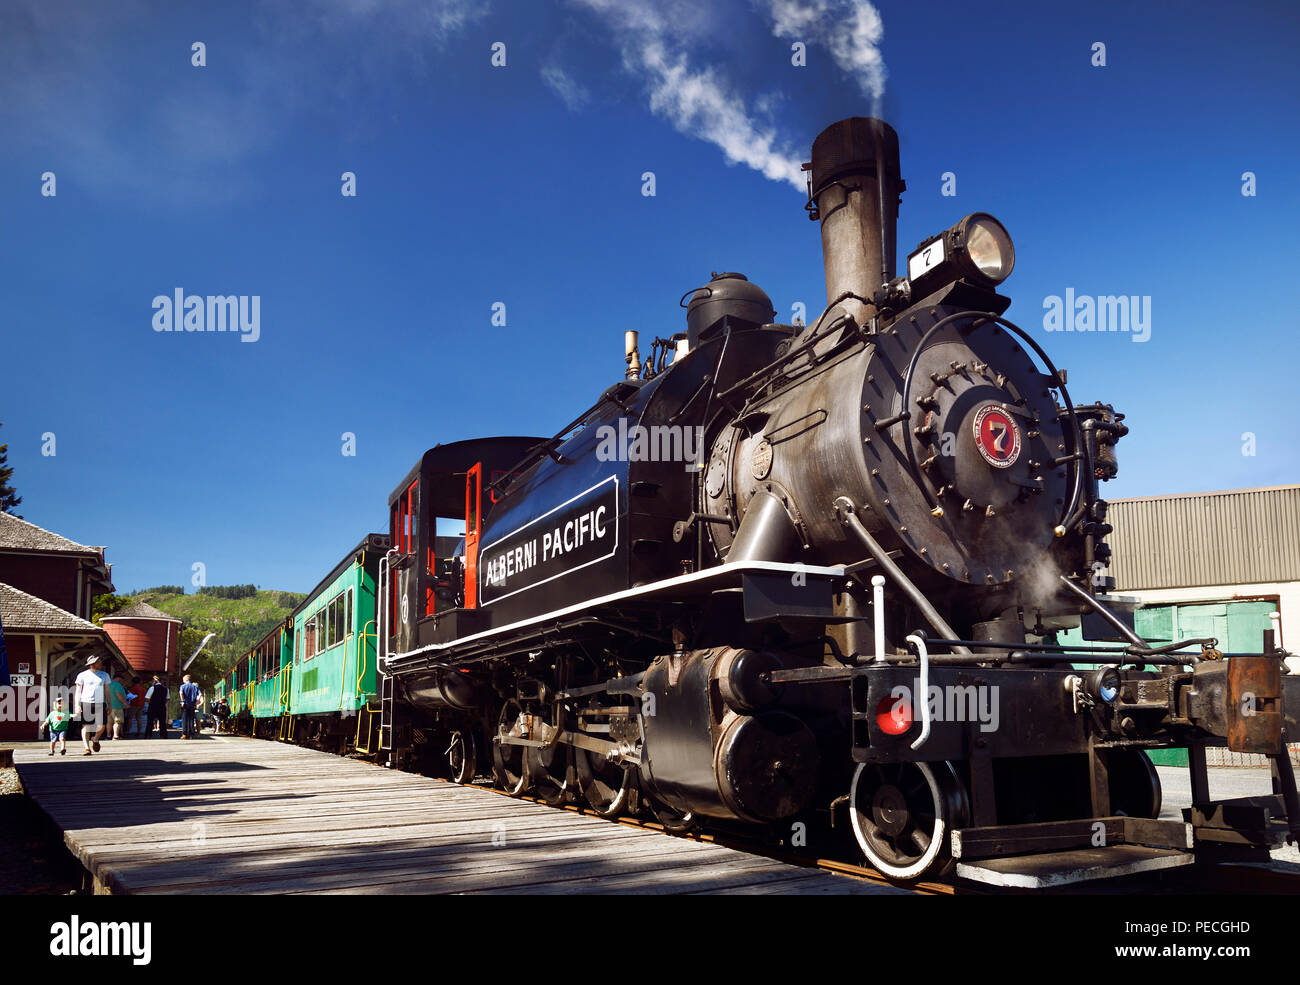 Alberni Pacific Railway historische Dampfmaschine in Port Alberni Bahnhof, Alberni Valley, Vancouver Island, British Columbia, Kanada 2018 Stockfoto